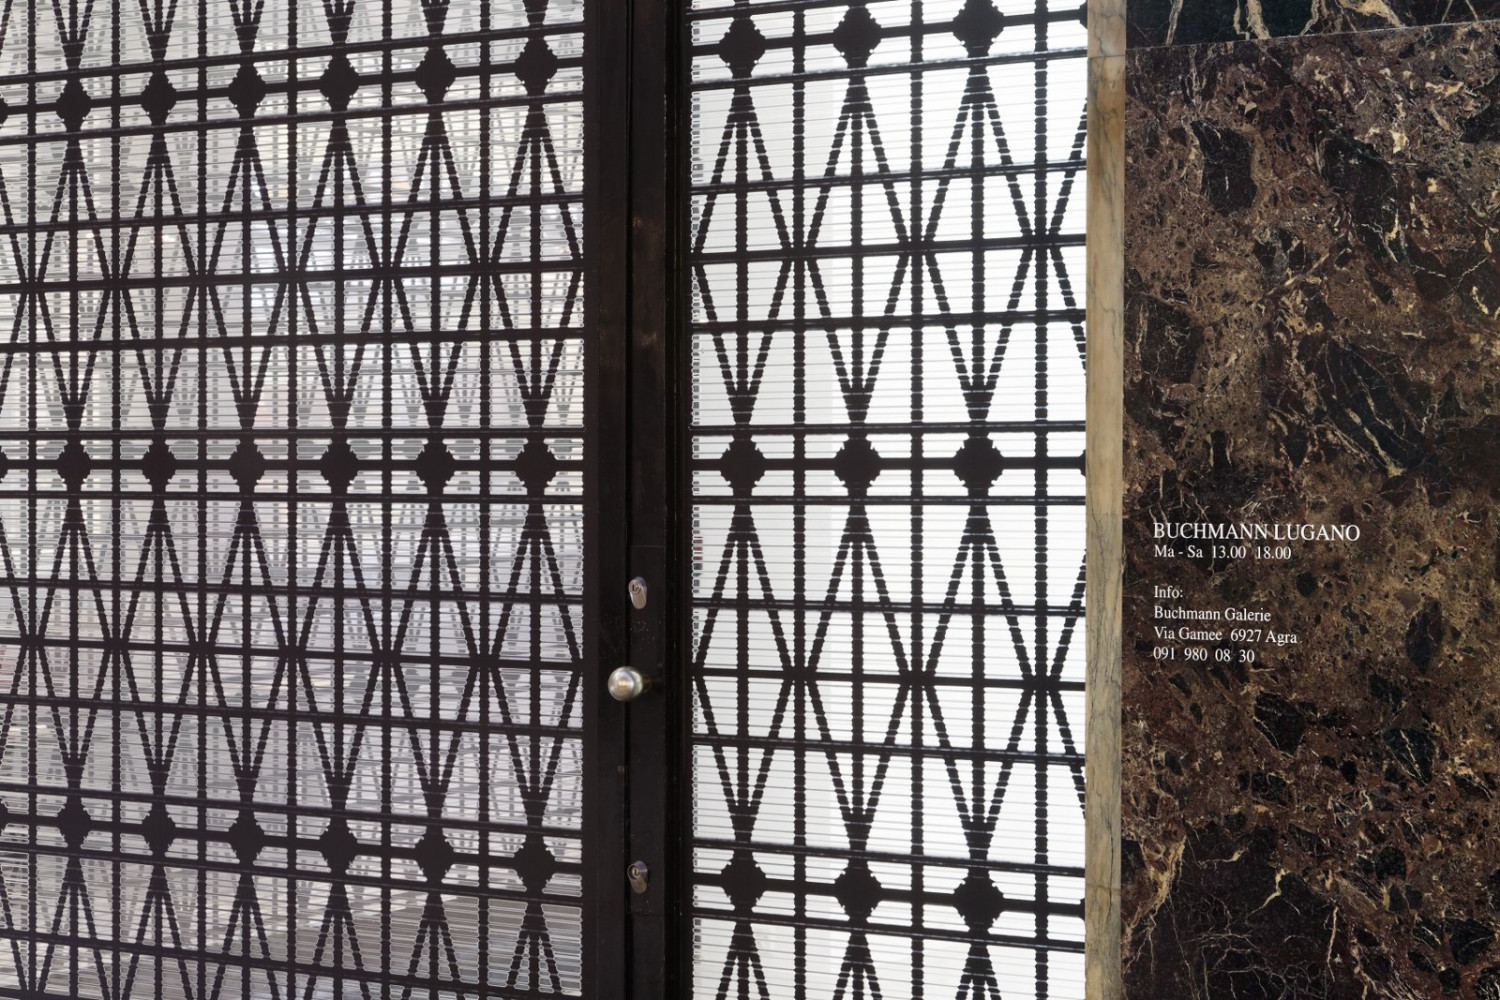 Bettina Pousttchi, ‘Curtain Wall (detail)’, Installation view, Buchmann Lugano, 2015